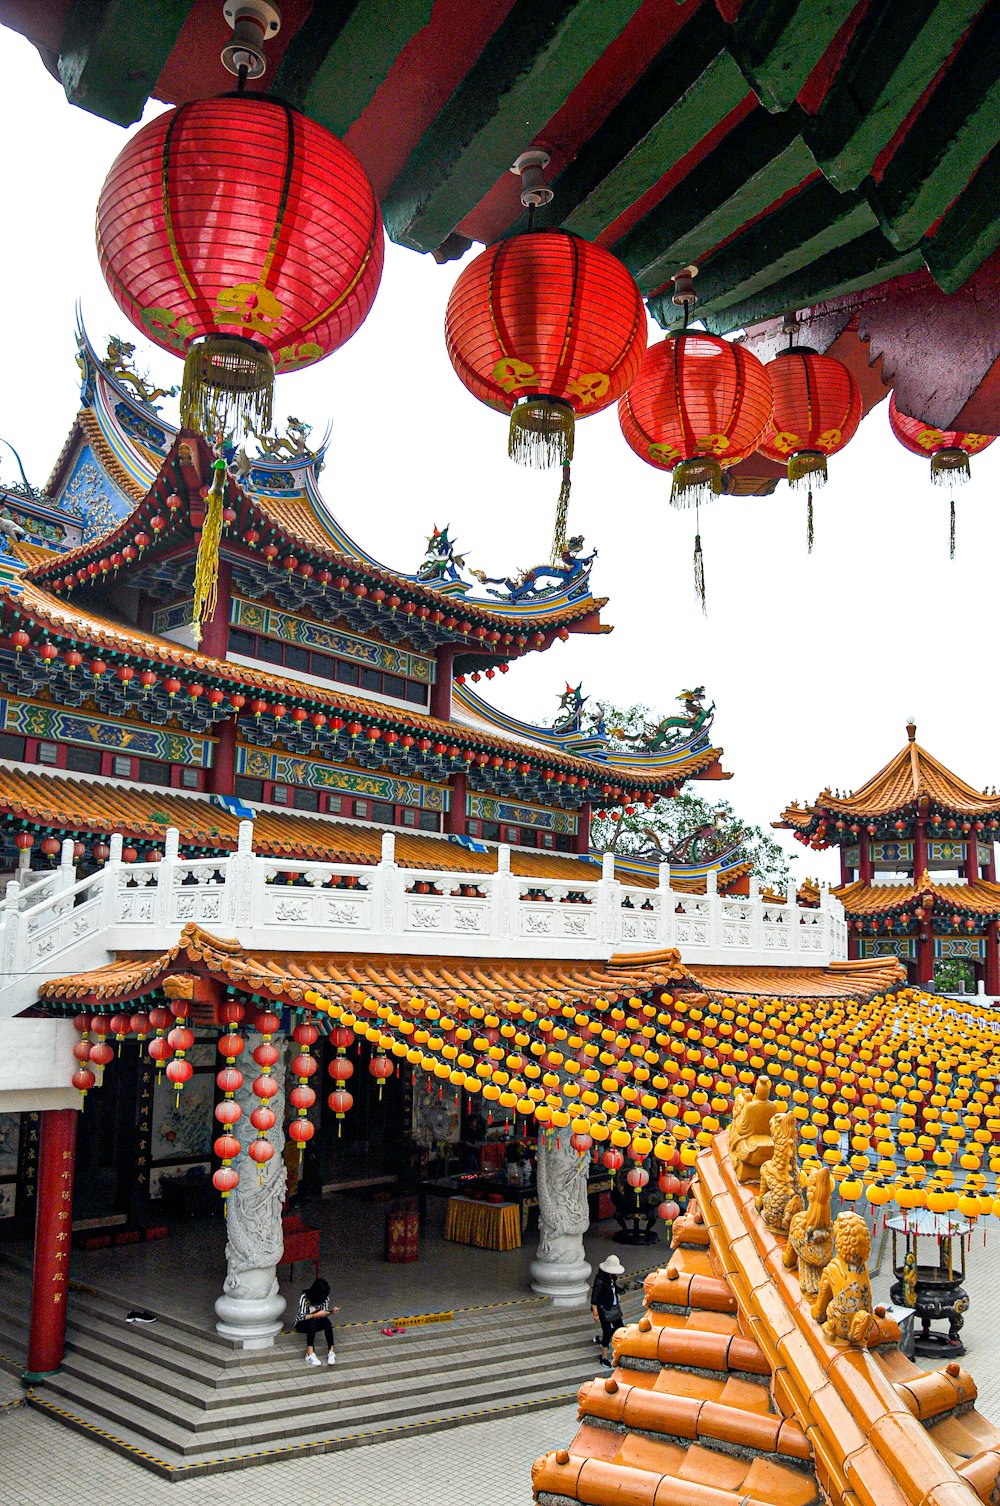 Temple chinois rouge et brun